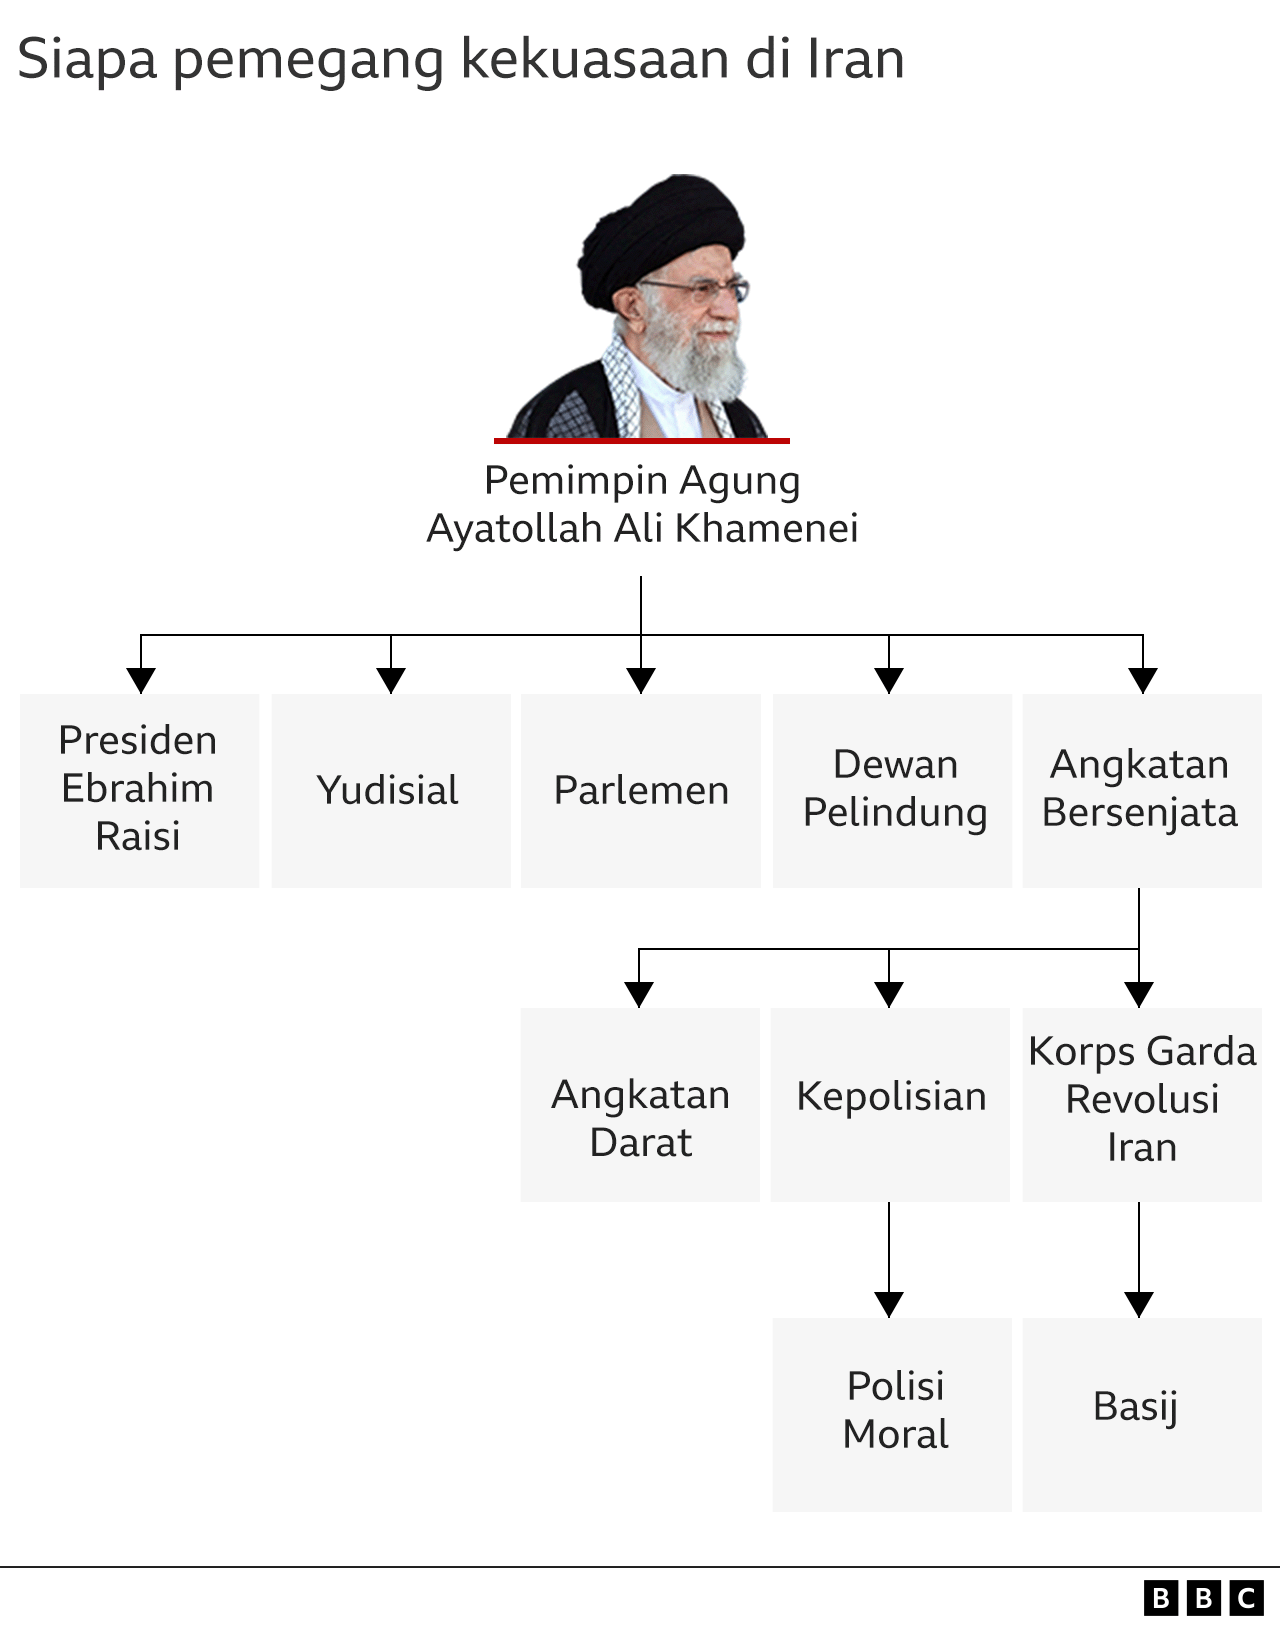 Struktur kekuasaan di Iran